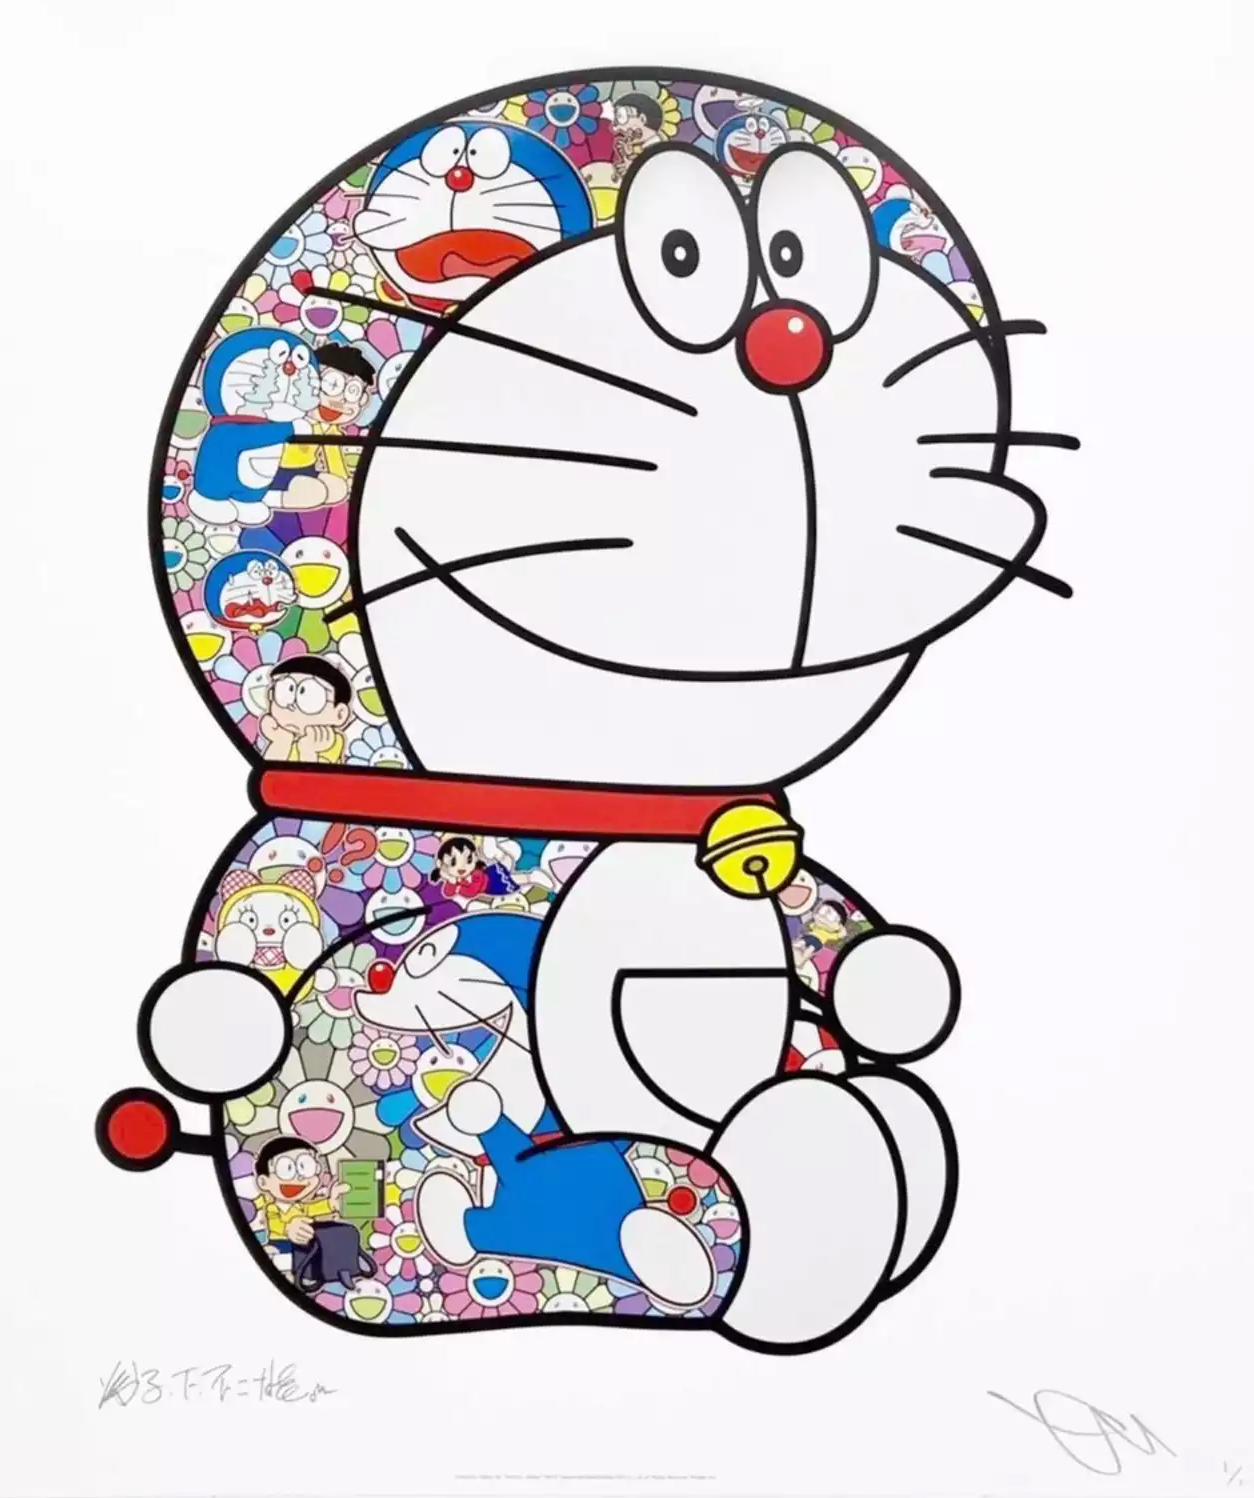 Takashi Murakami 村上隆 Art Prints: Doraemon Sitting Up Yoo-hoo, Nobita